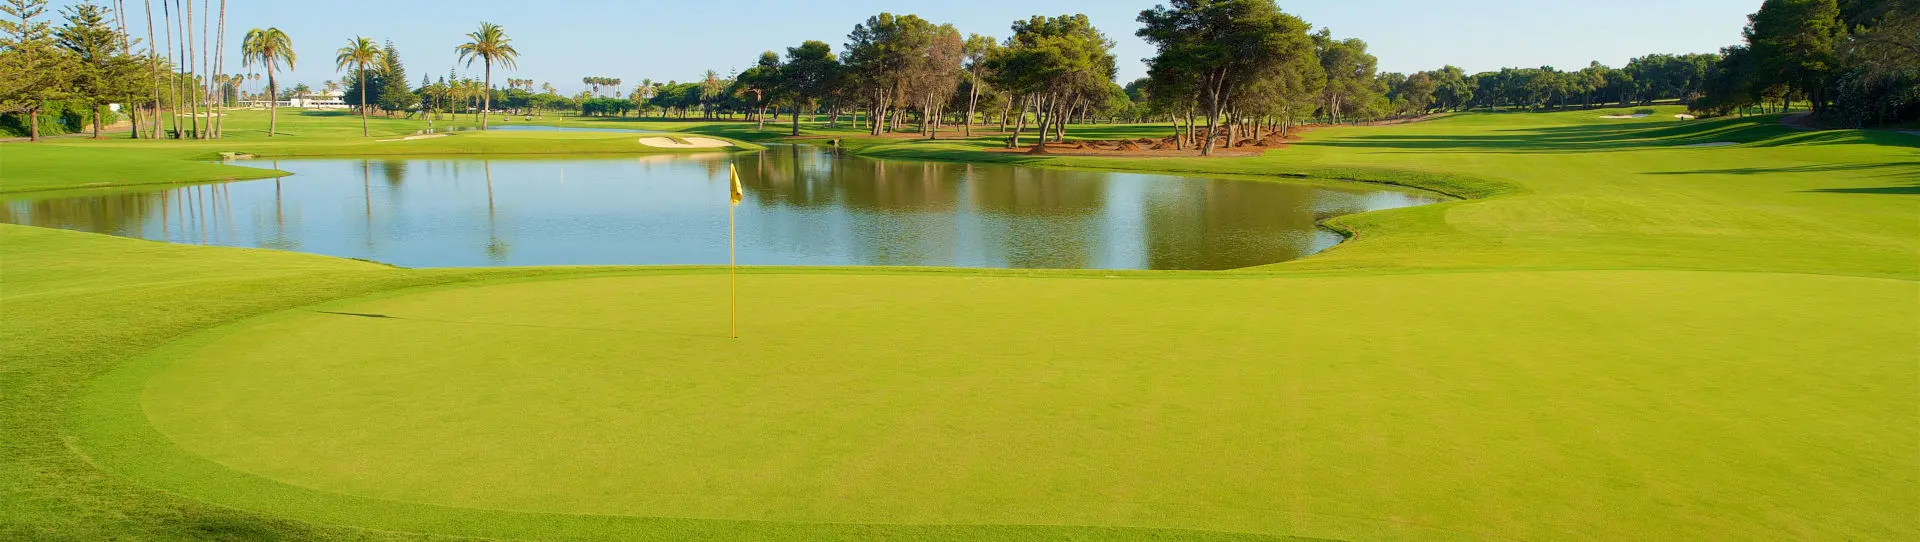 Spain golf courses - Real Sotogrande Golf - Photo 1